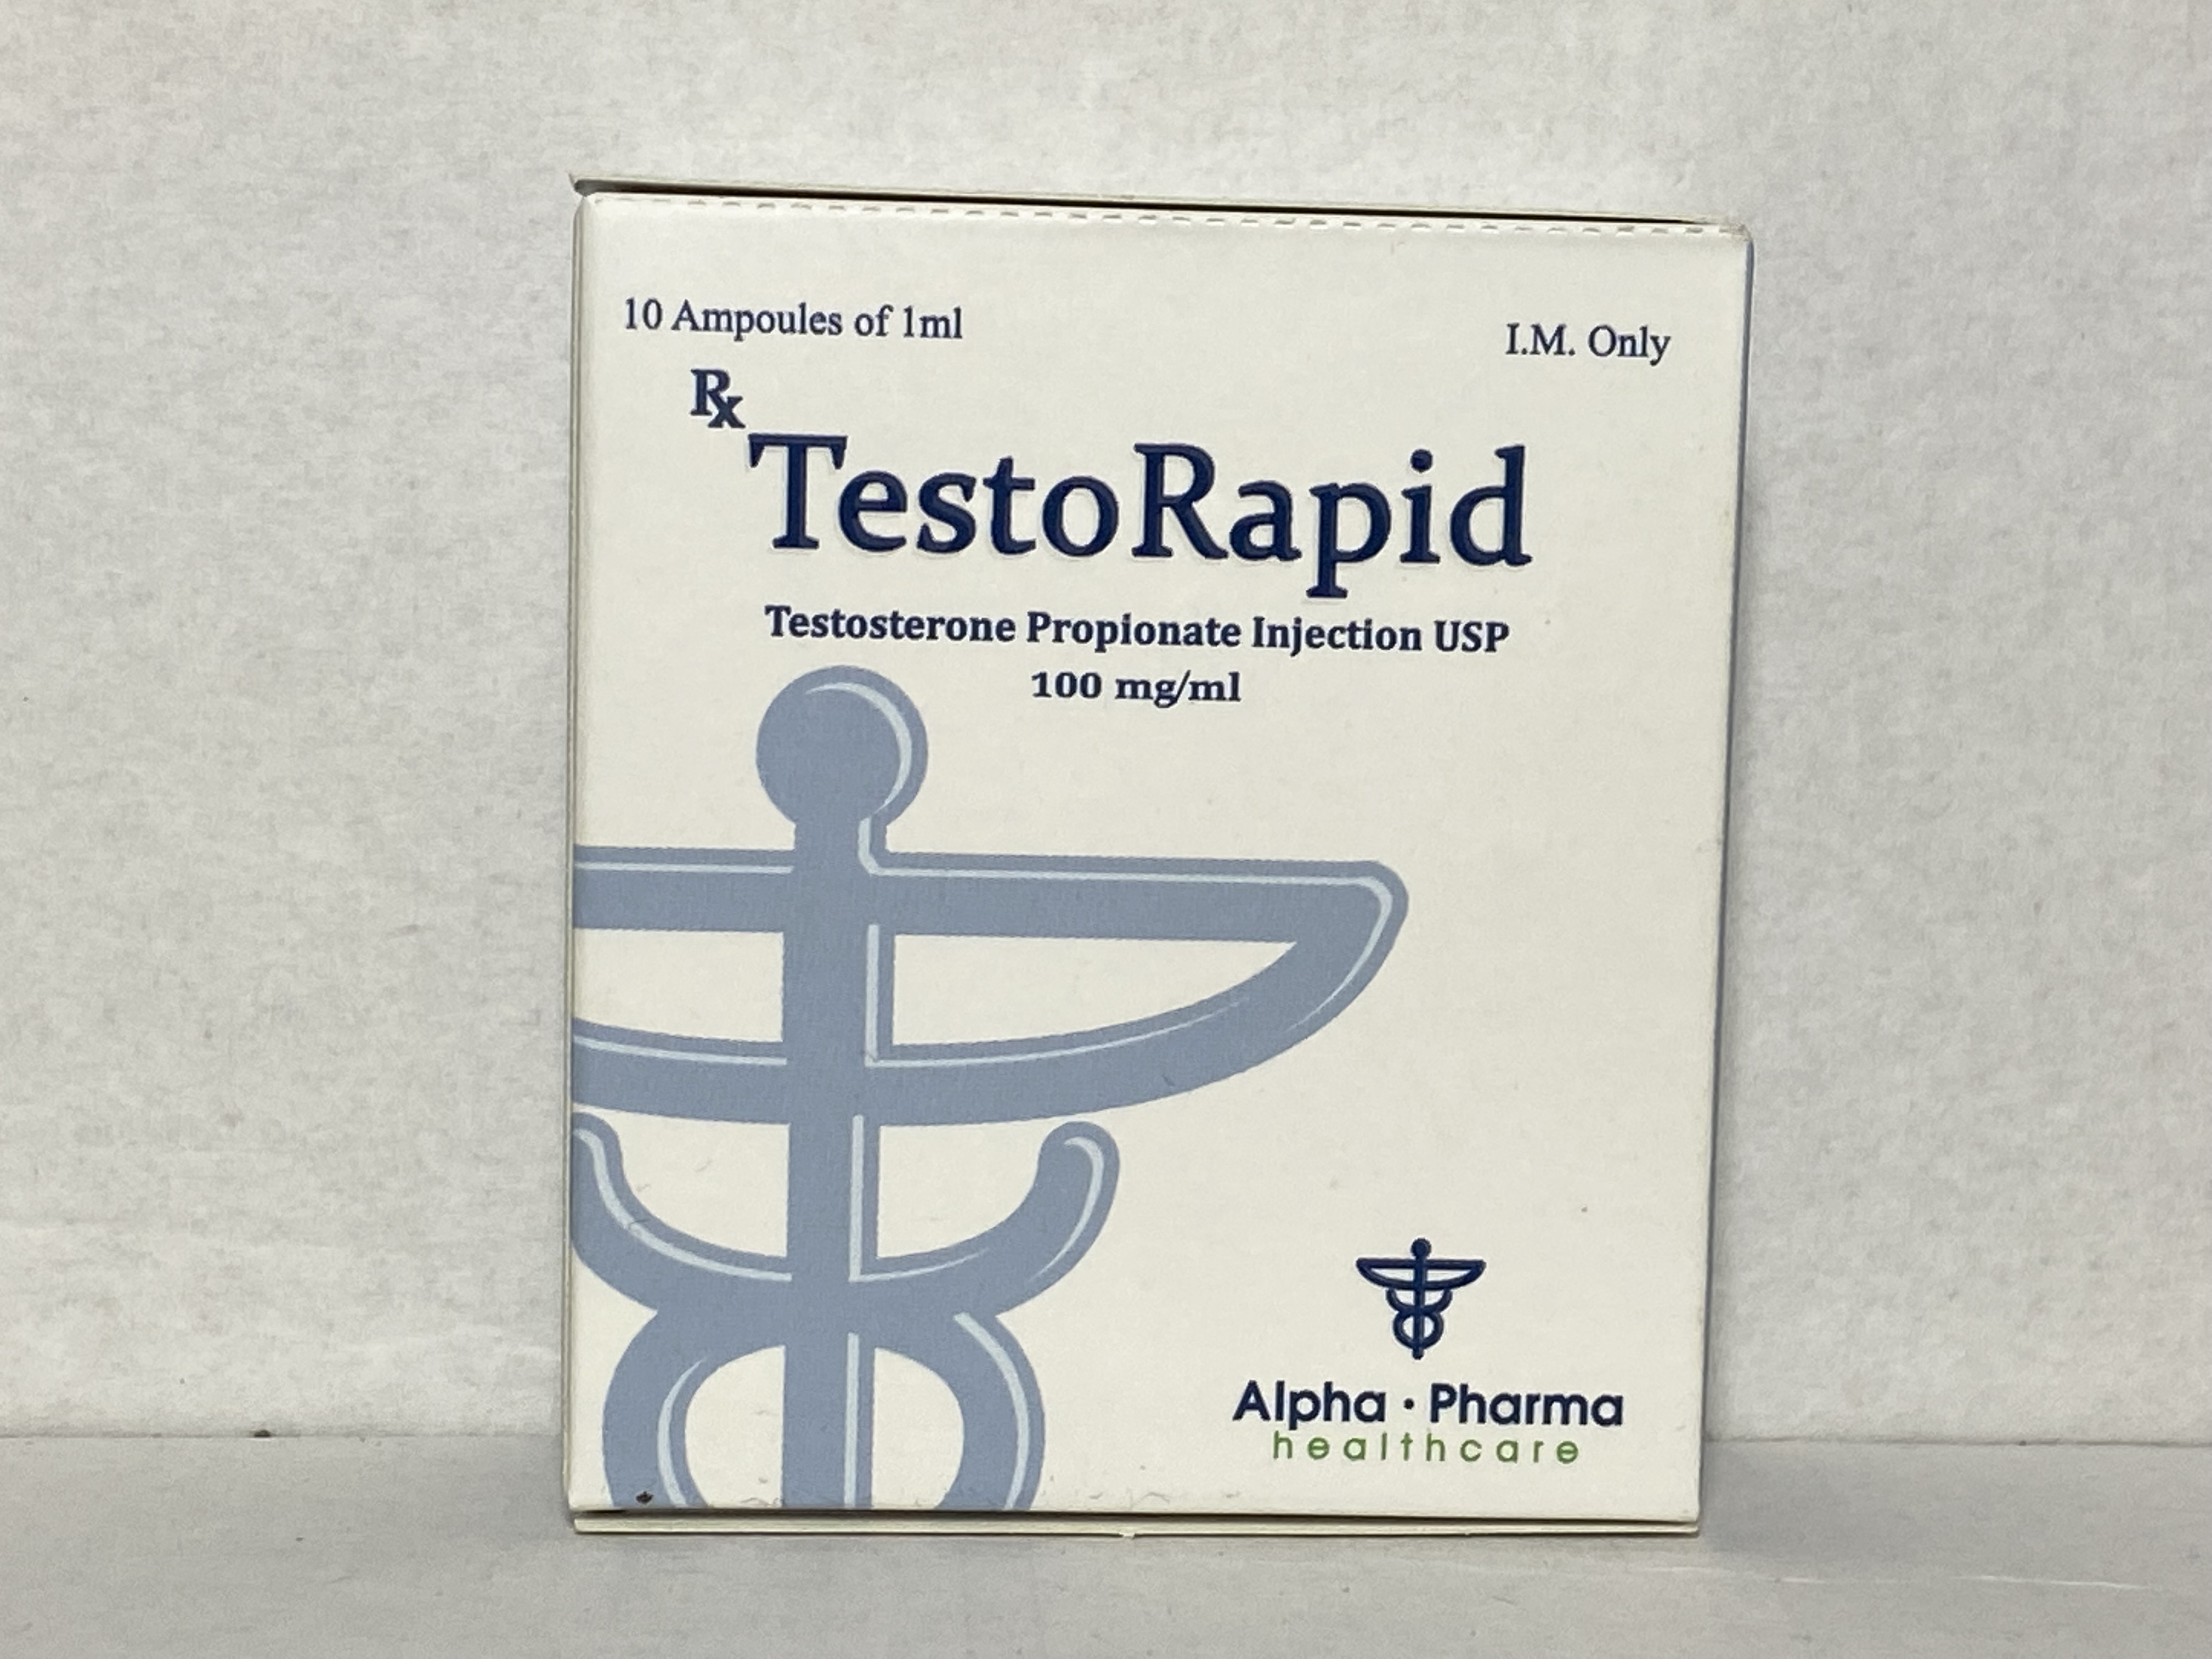 TestoRapid